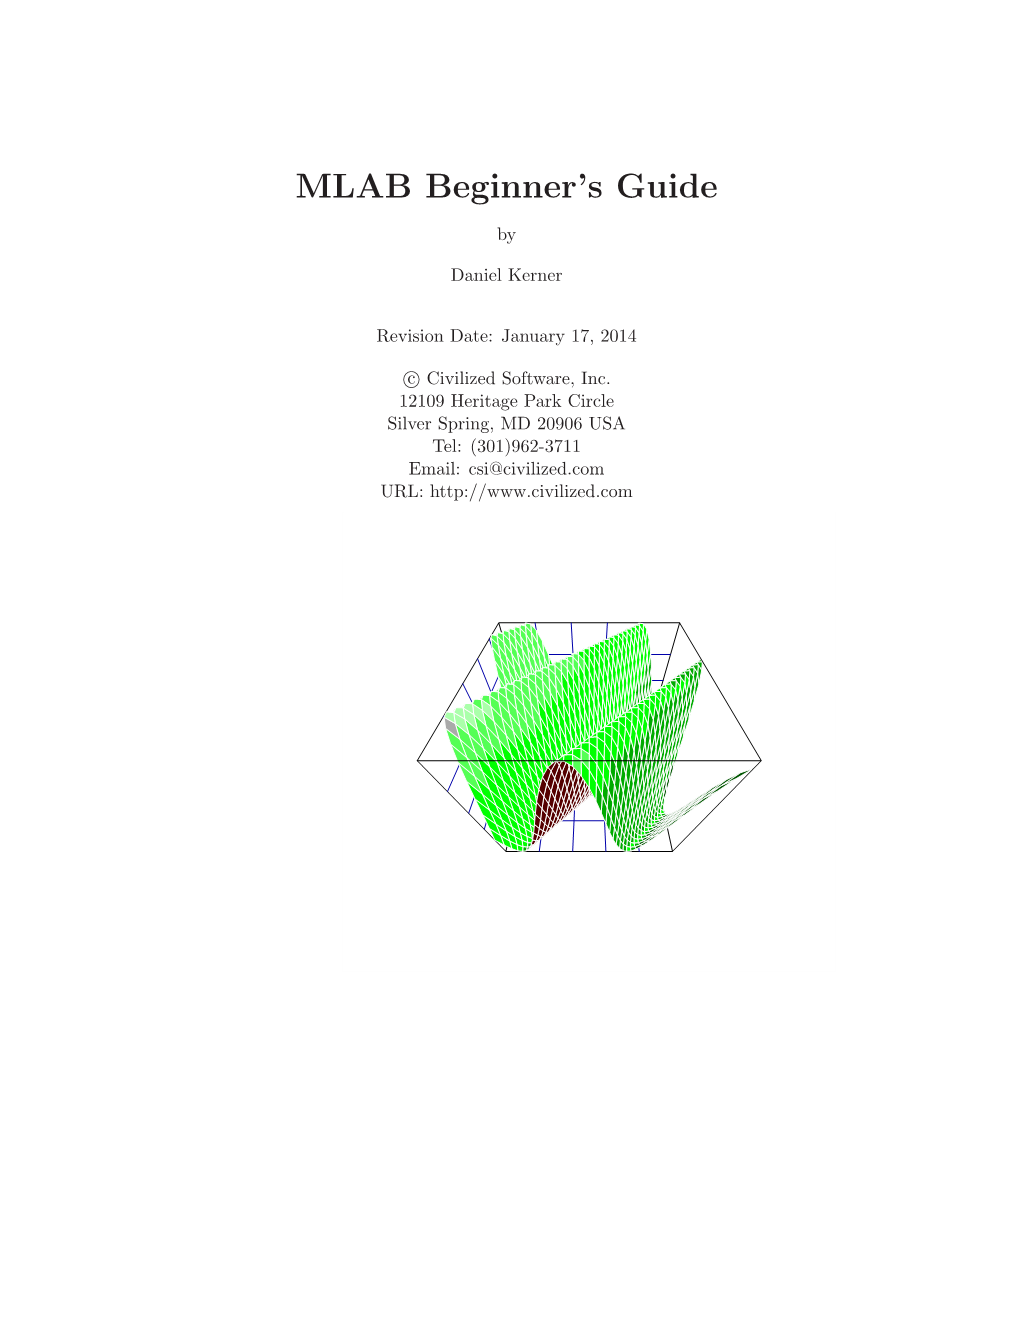 MLAB Beginner's Guide Manual